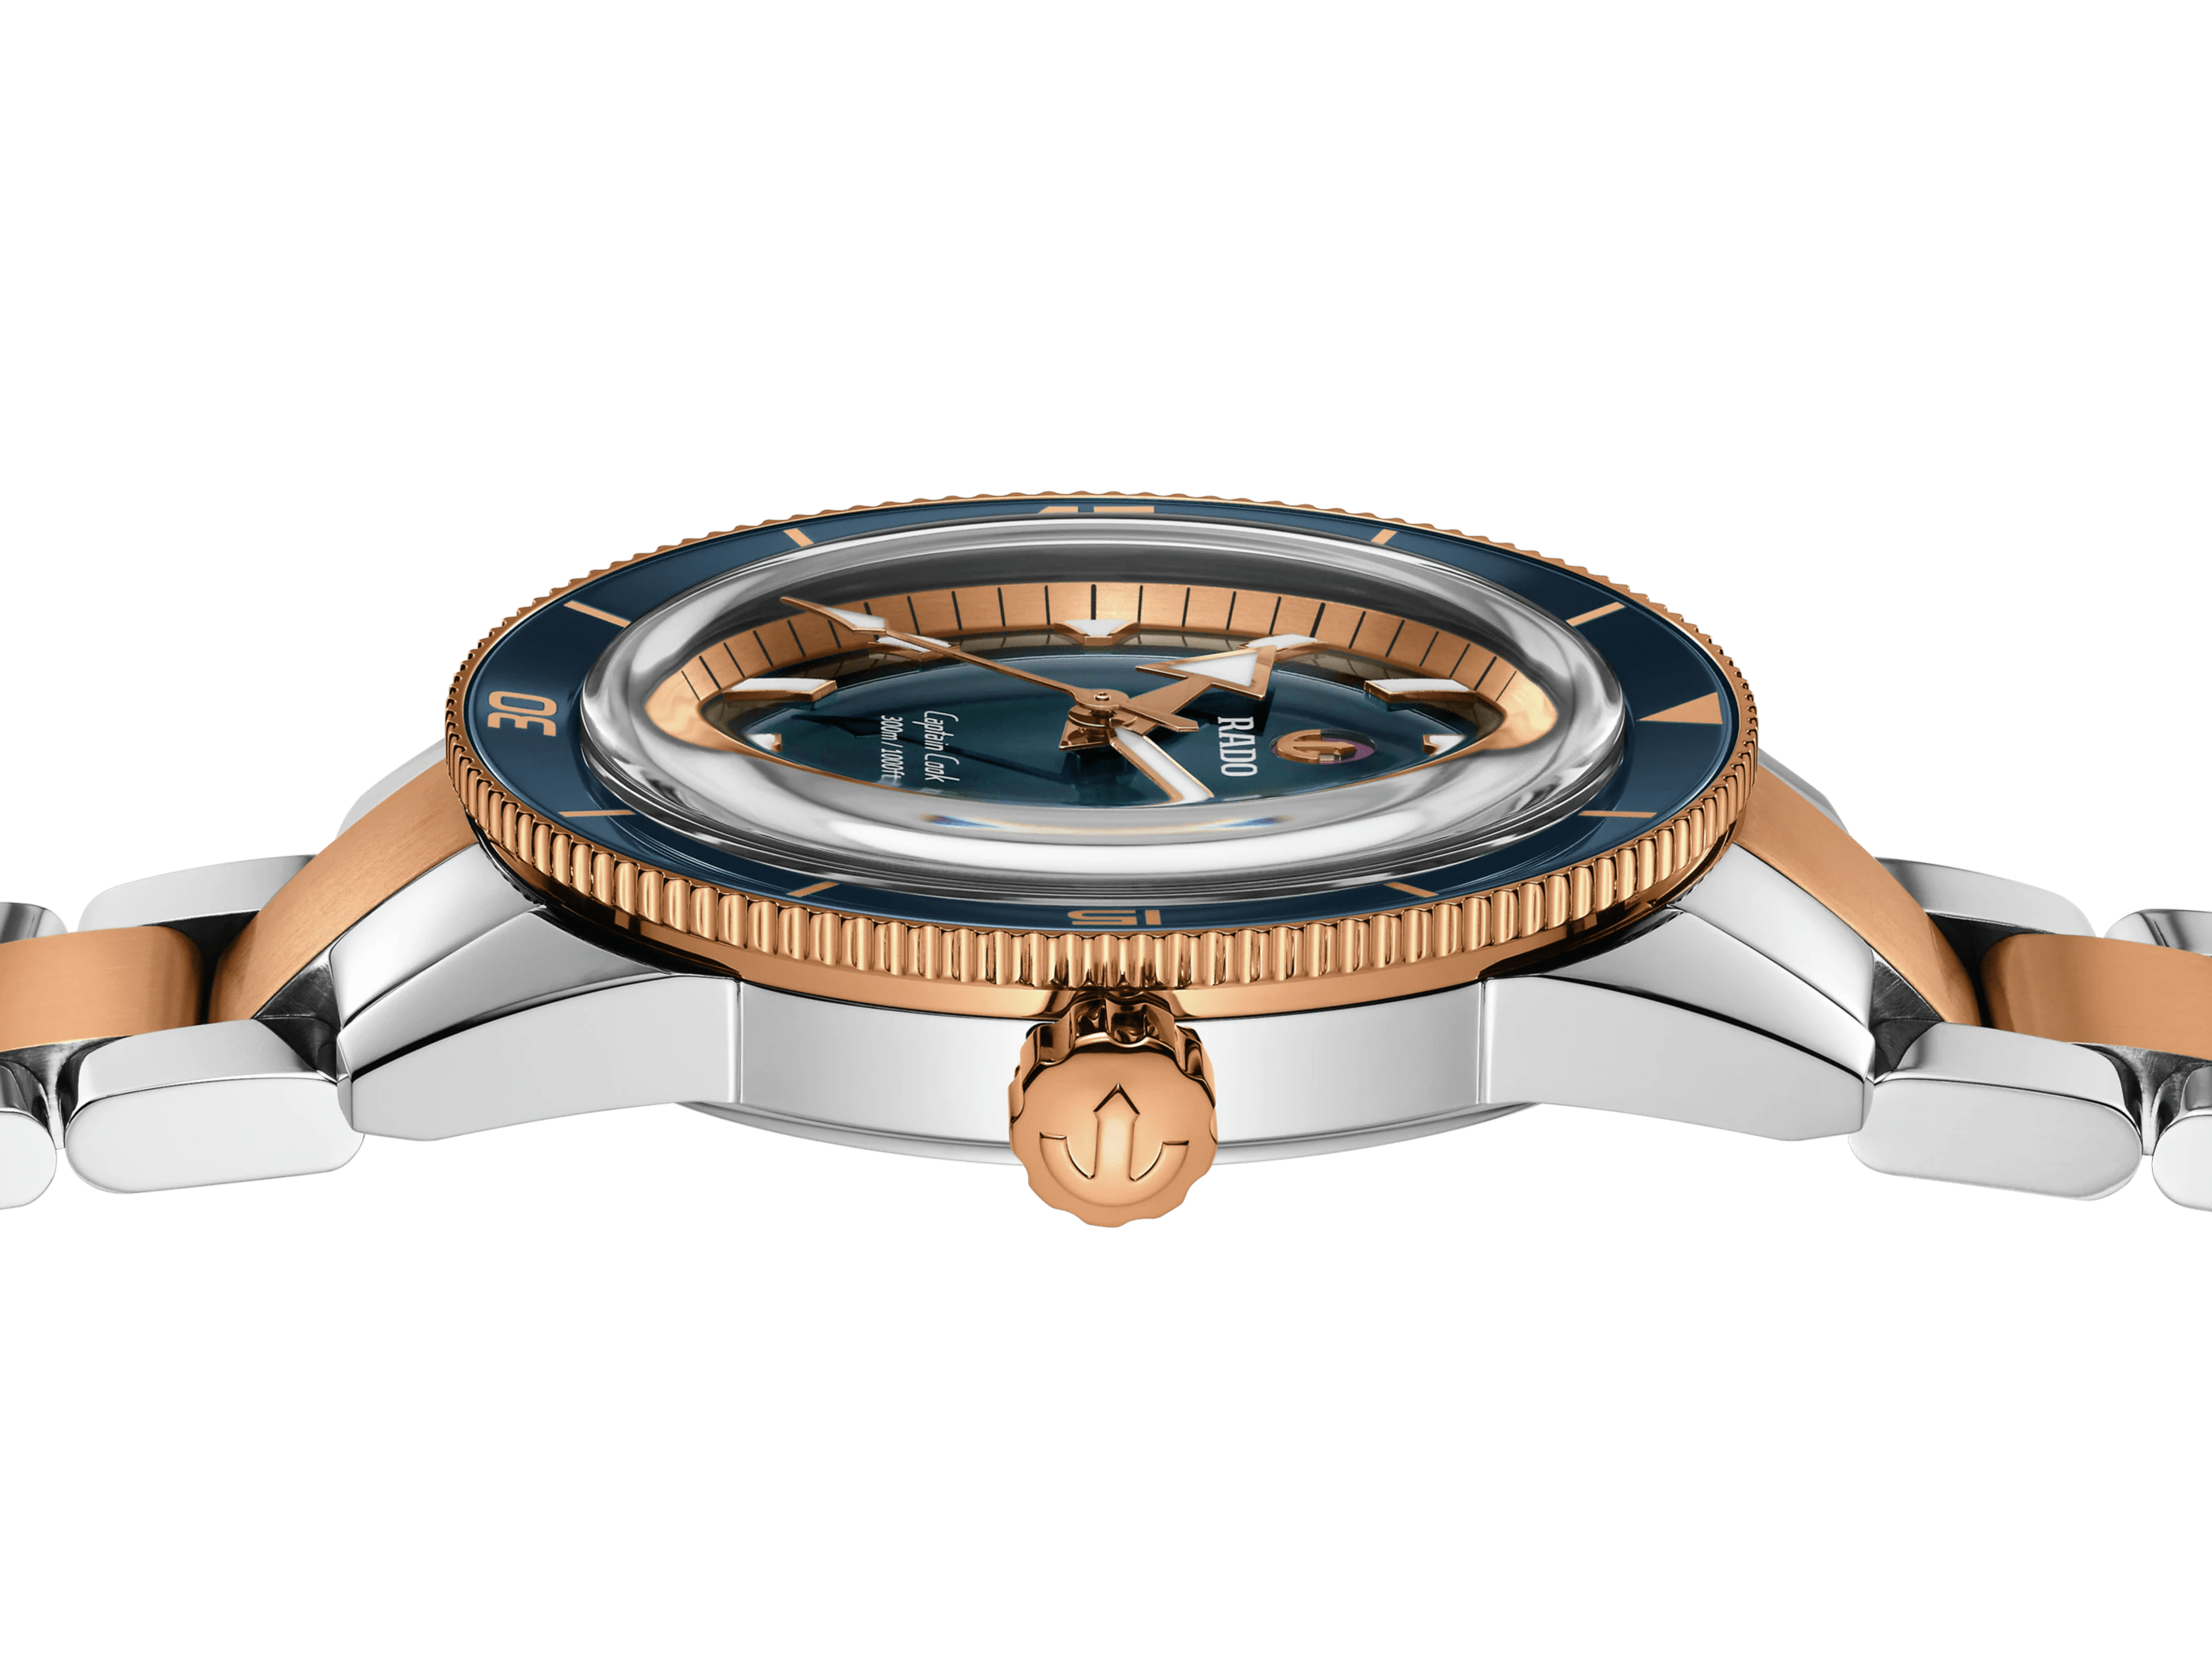 RADO Captain Cook Automatic 42mm Rose Gold-Blue Men's Watch R32137203